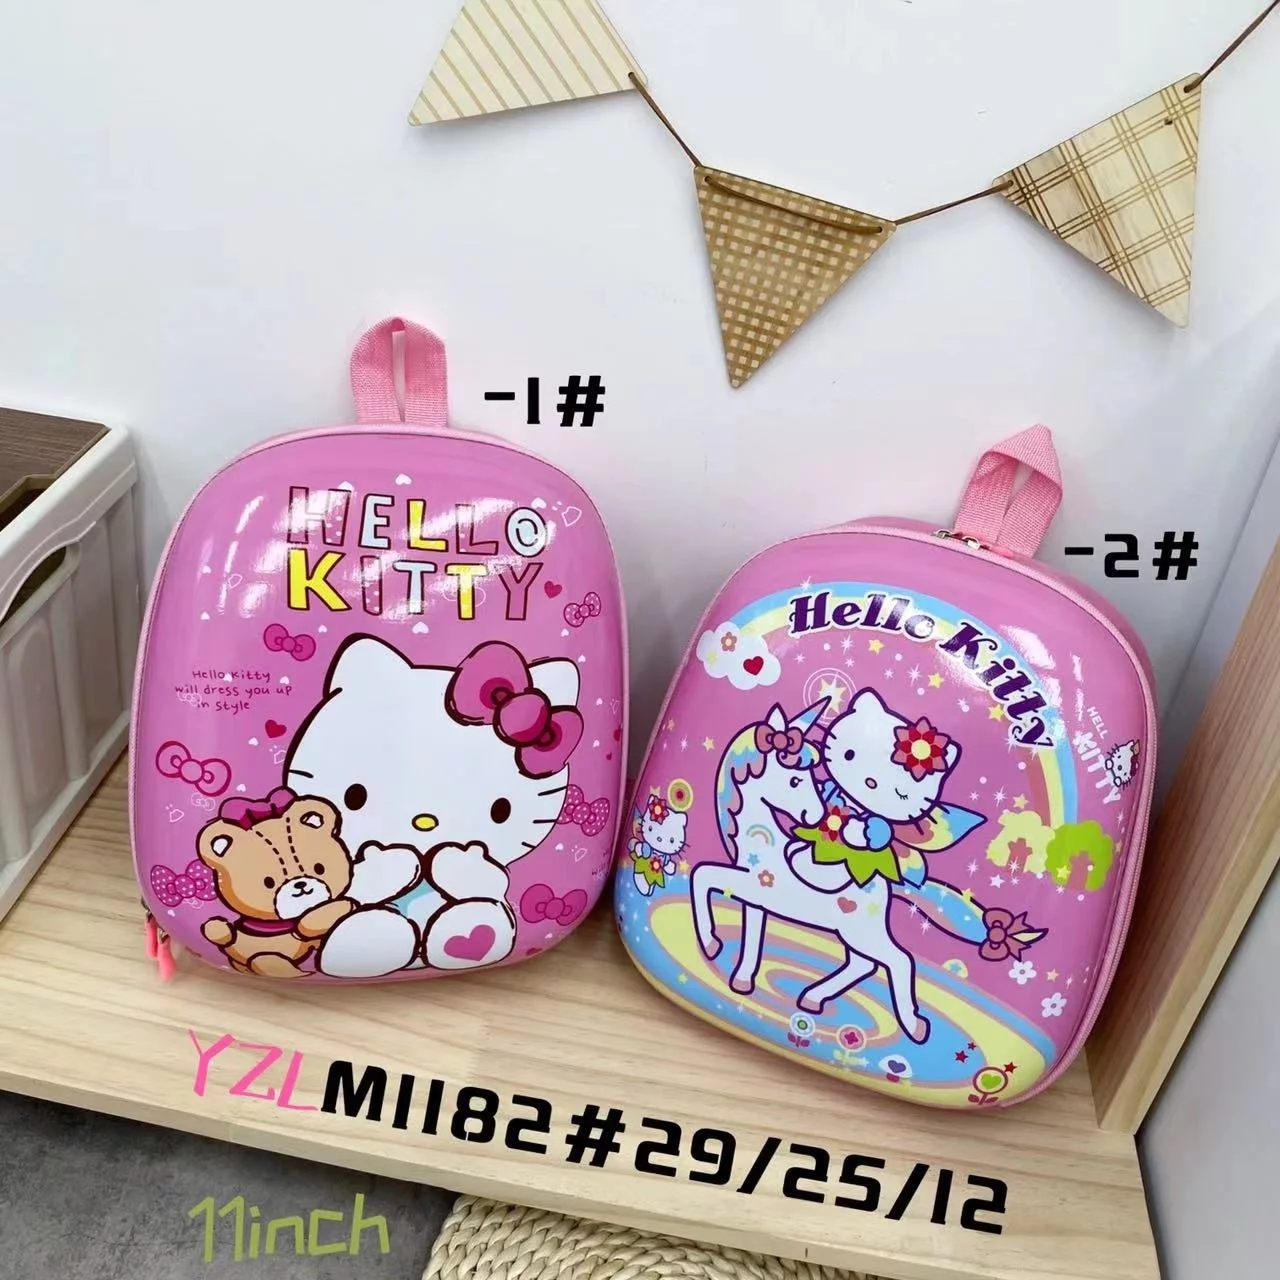 Детский рюкзак Hello Kitty (арт. YZLM1182) оптом